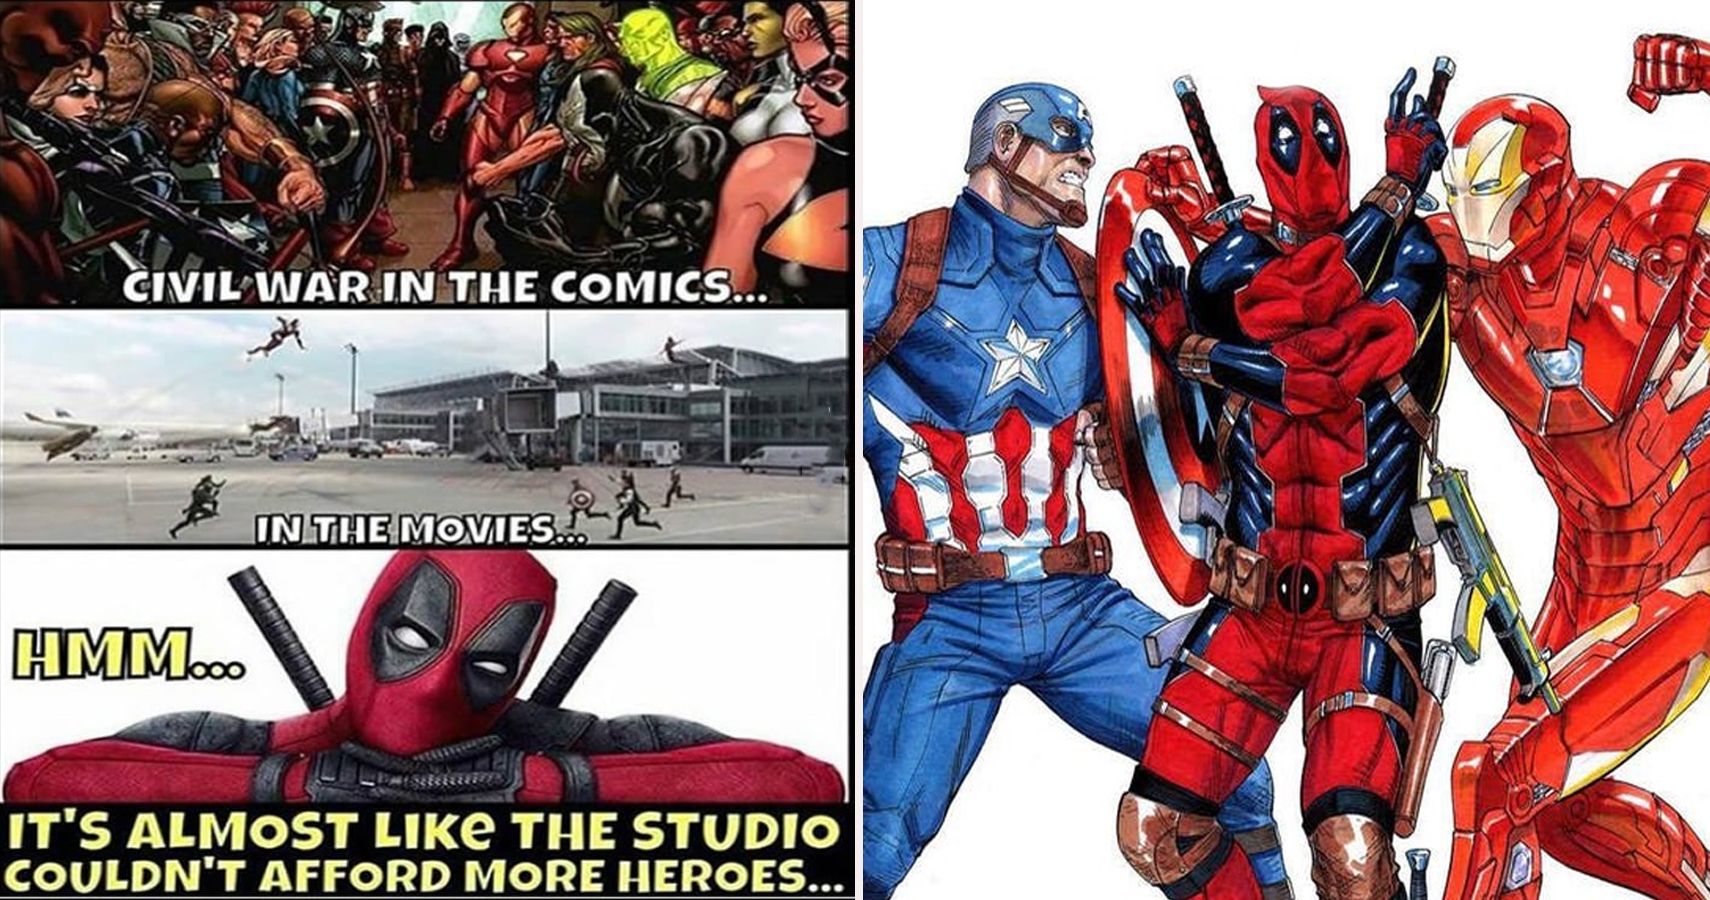 Comics tagged with Roblox Memes - Comic Studio